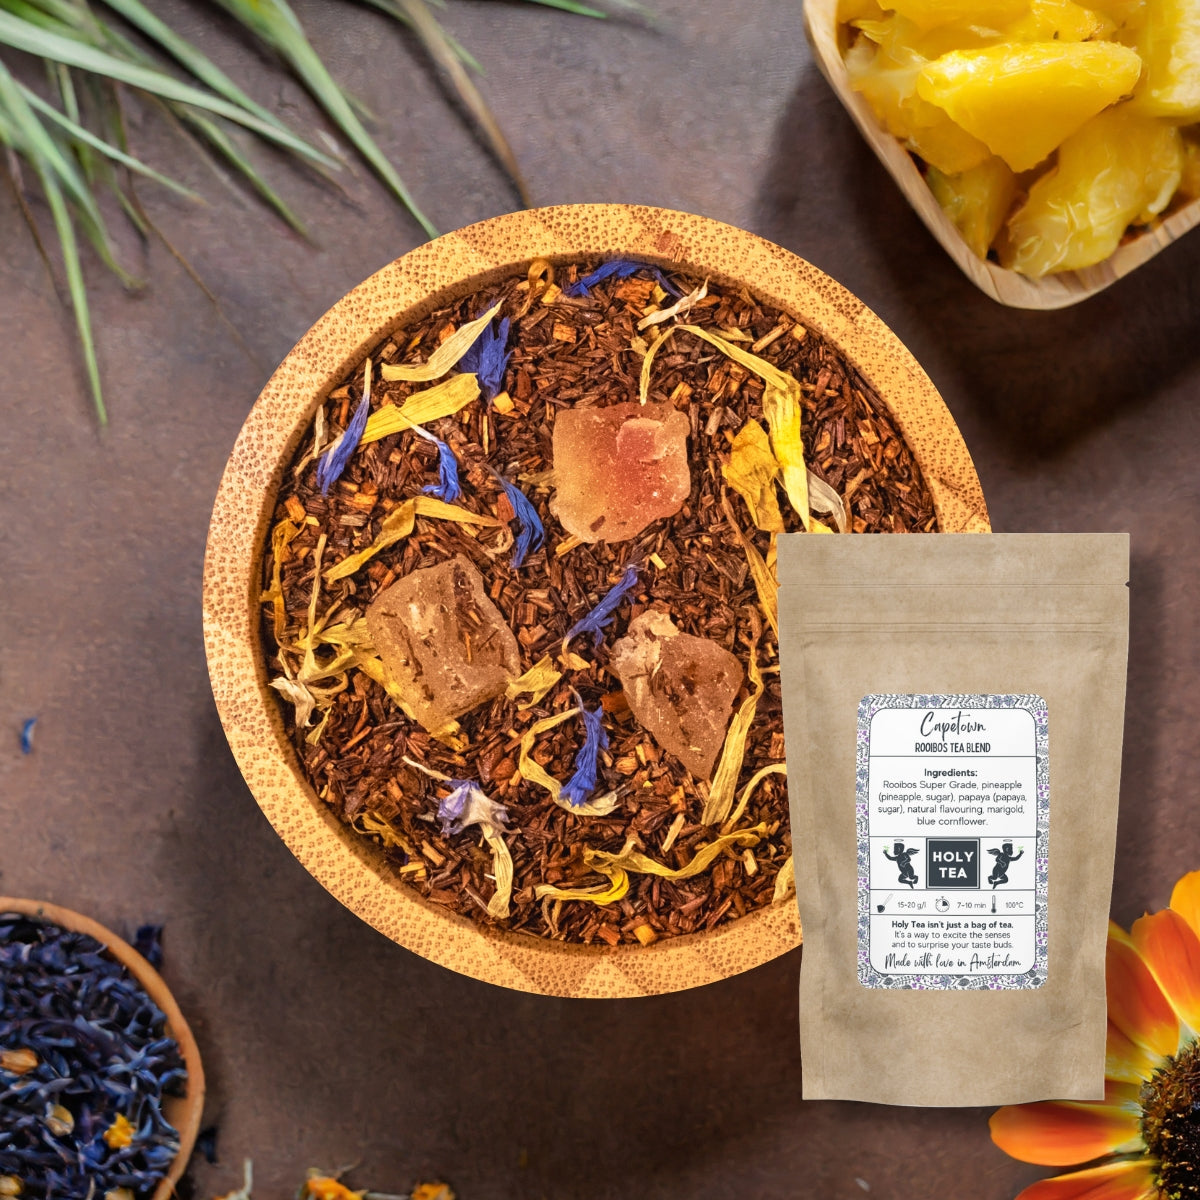 Rooibos, Herbal & Fruit Tea Blend - Capetown - Holy Tea Amsterdam - 50G